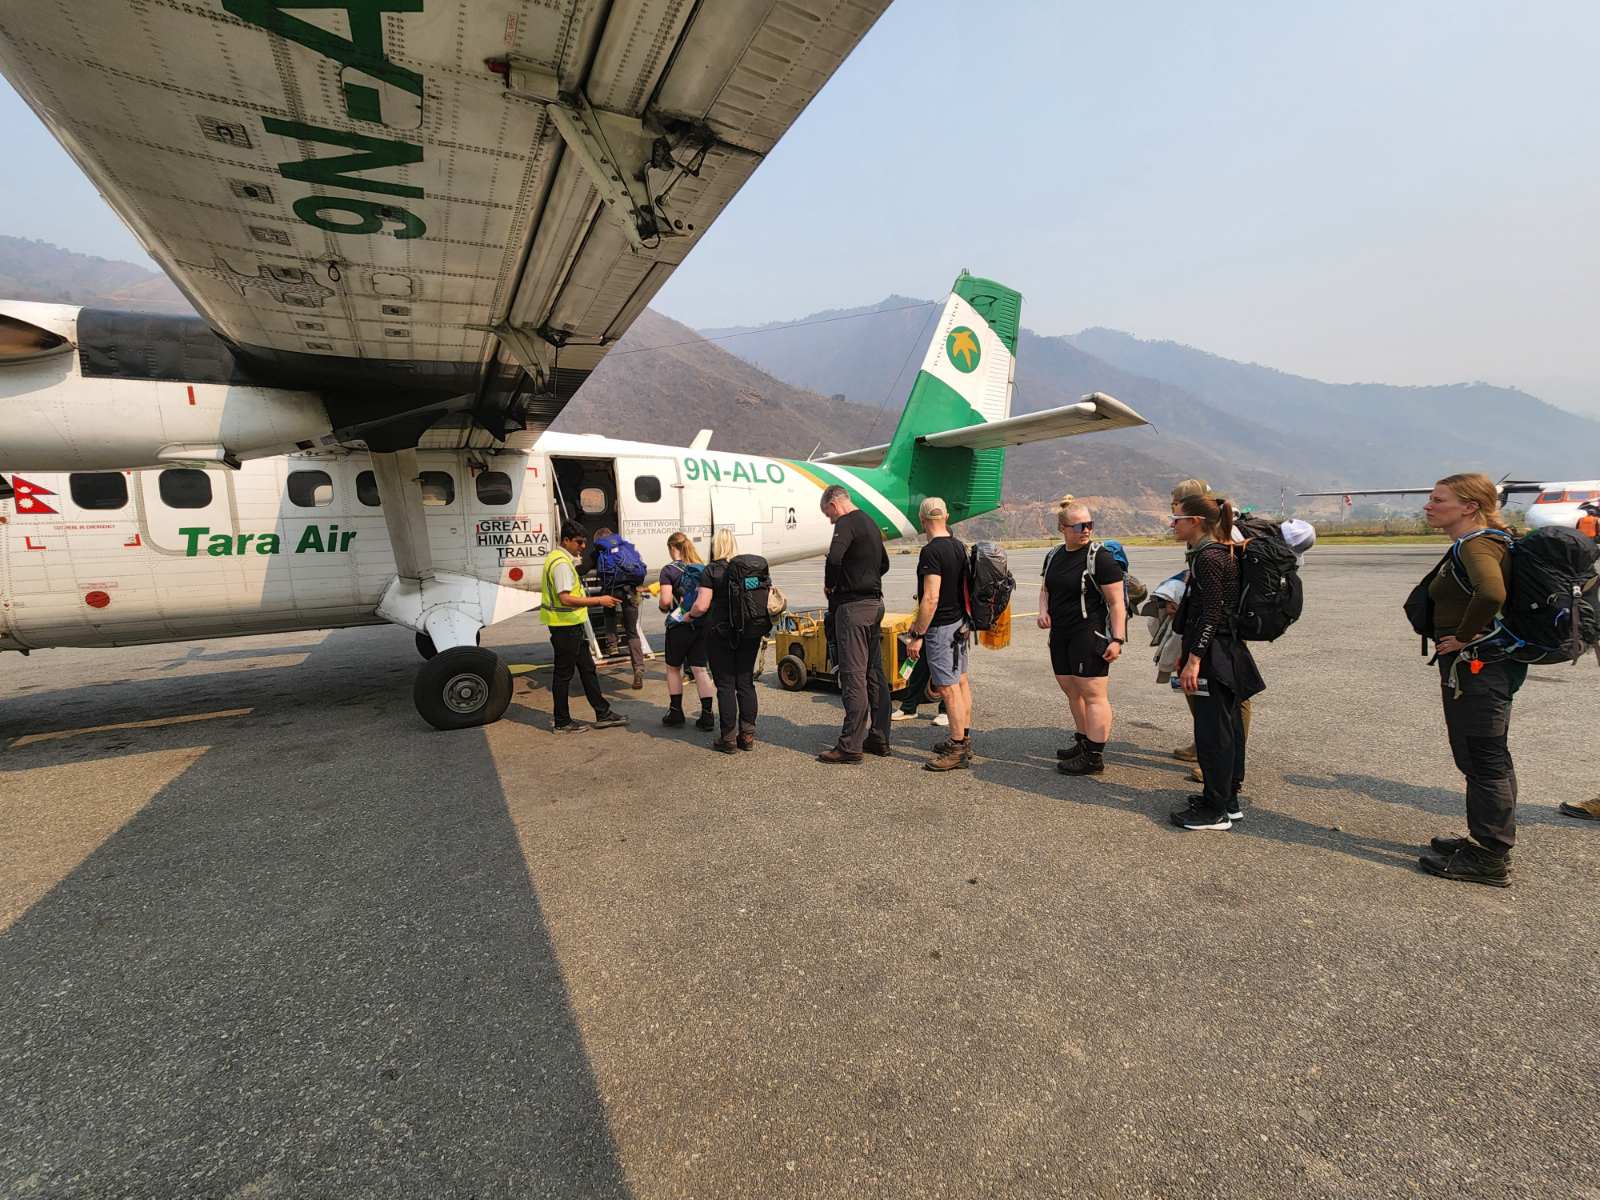 Tara Air operates more than a dozen daily flights from Manthali to Lukla